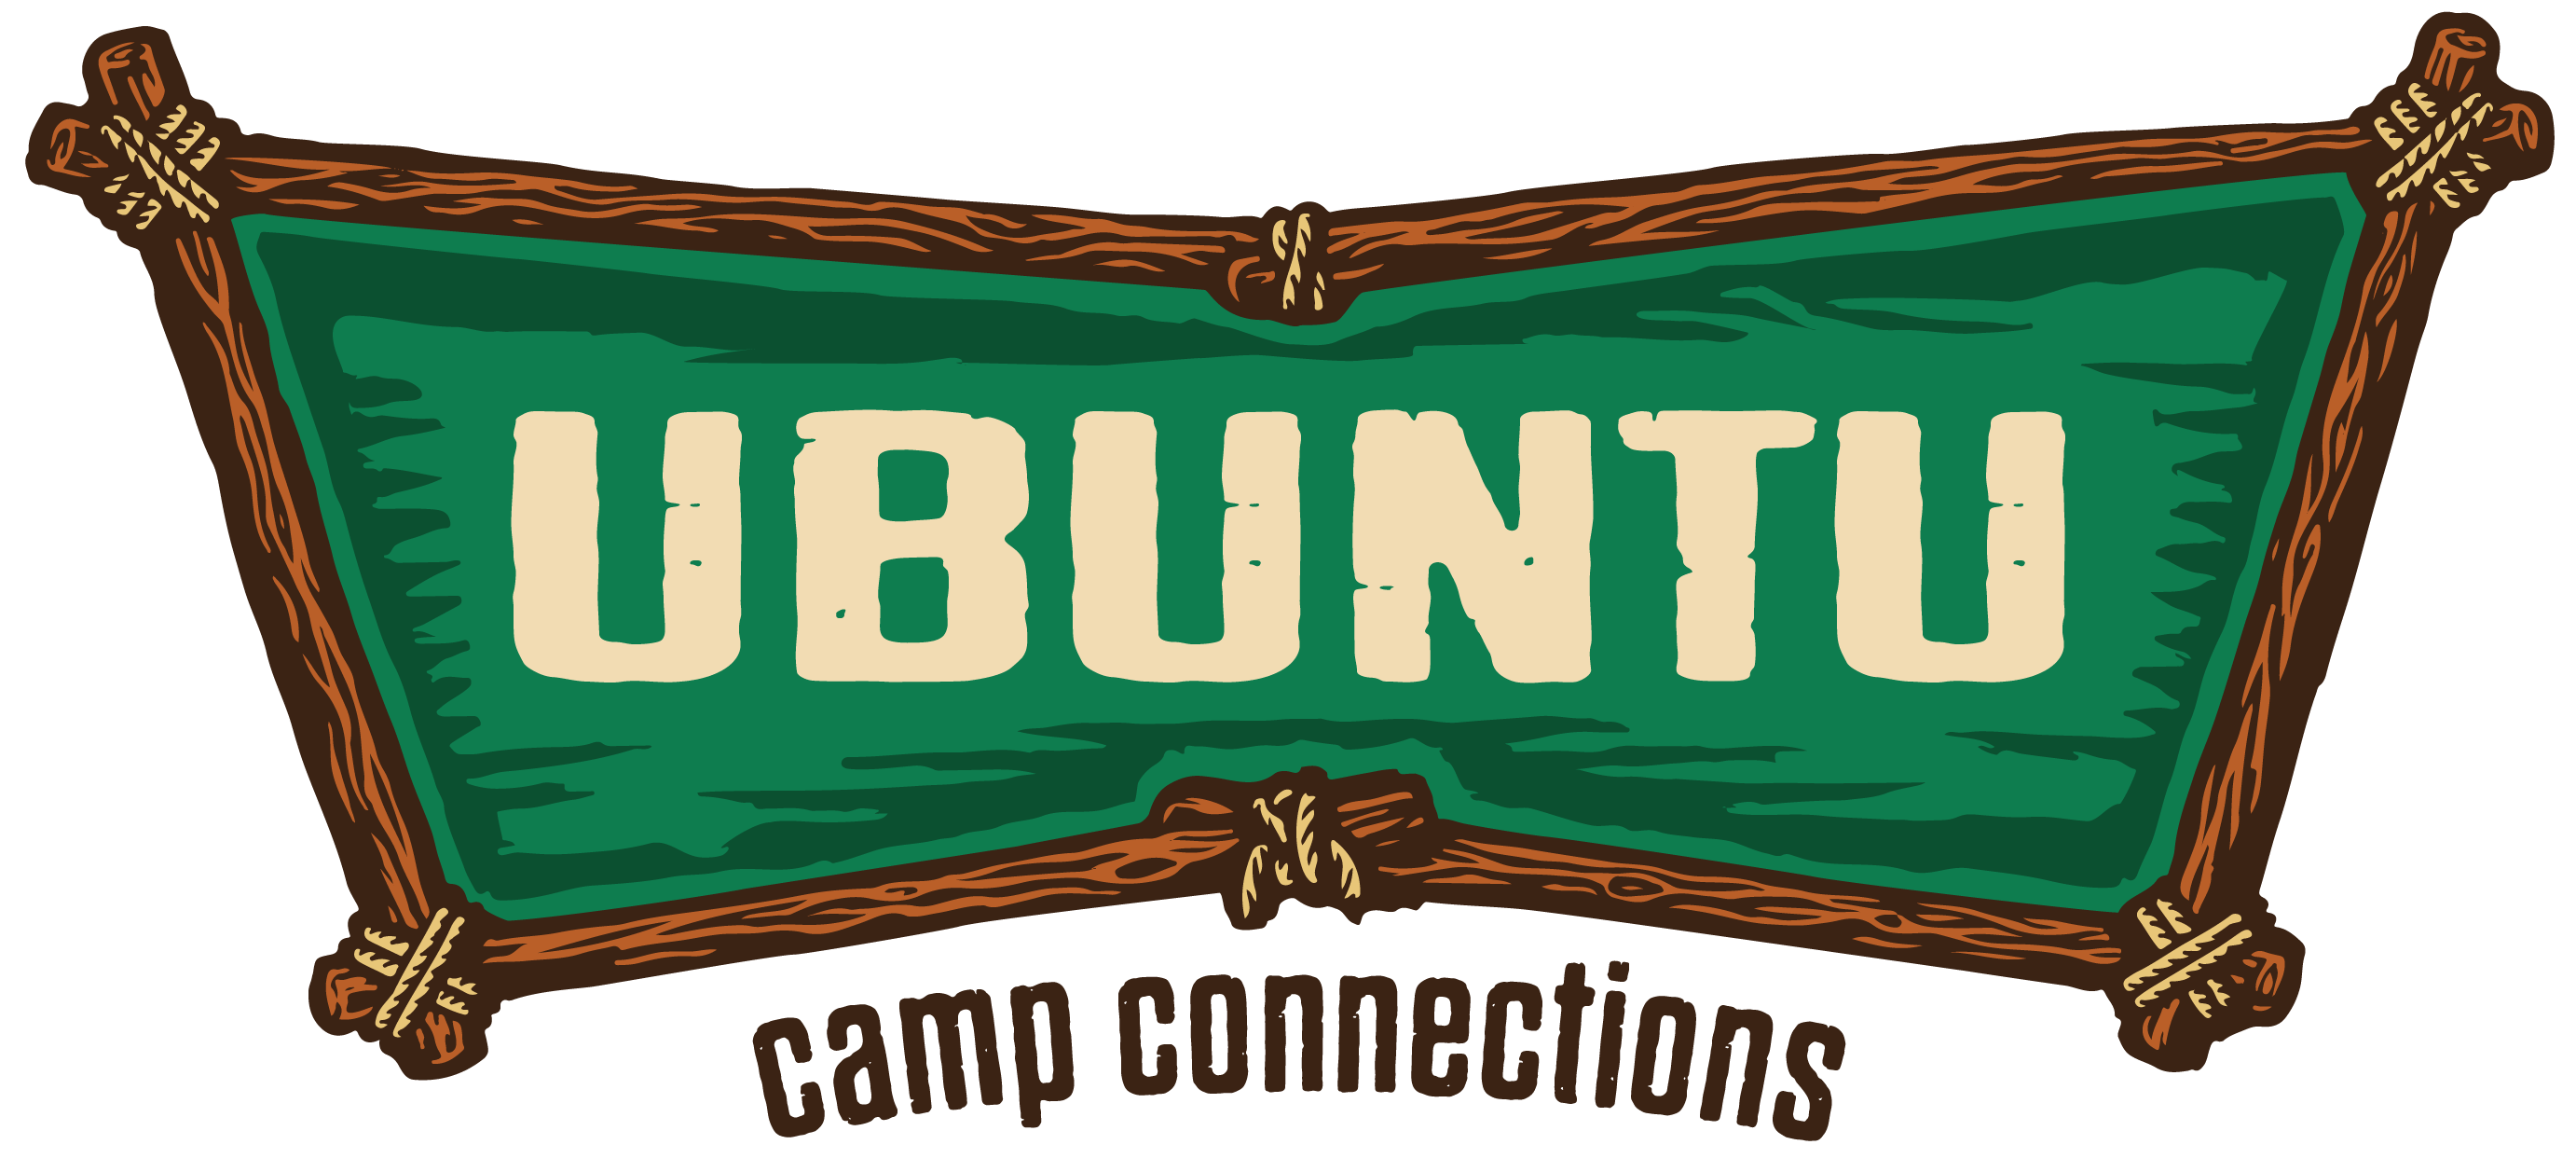 Ubuntu Camp Connections logo